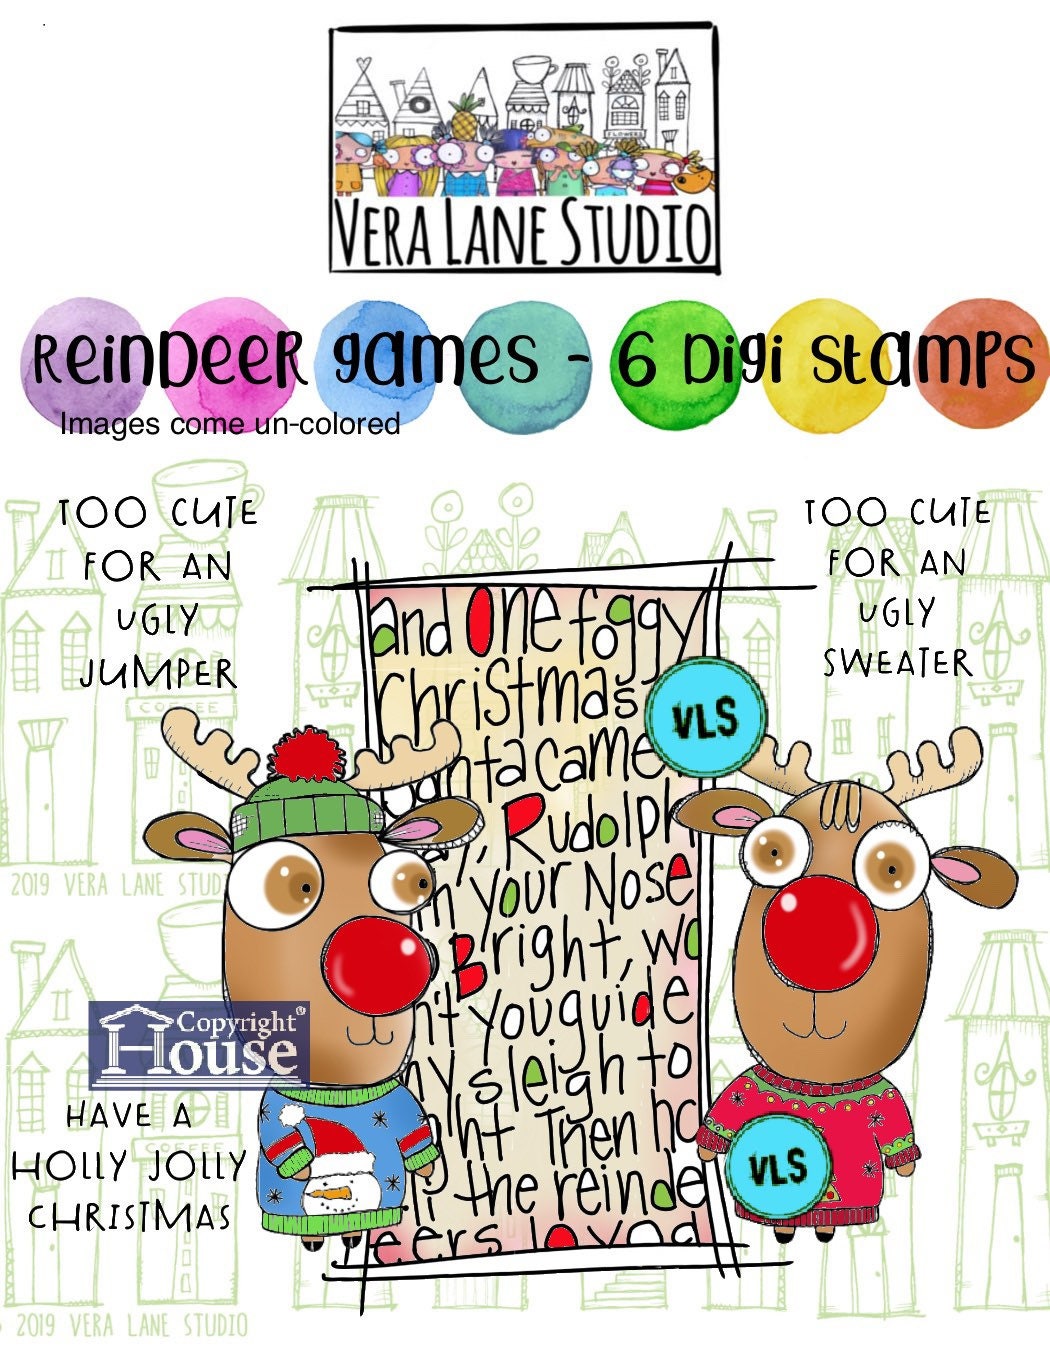 Reindeer Games - 6 digi stamp bundle